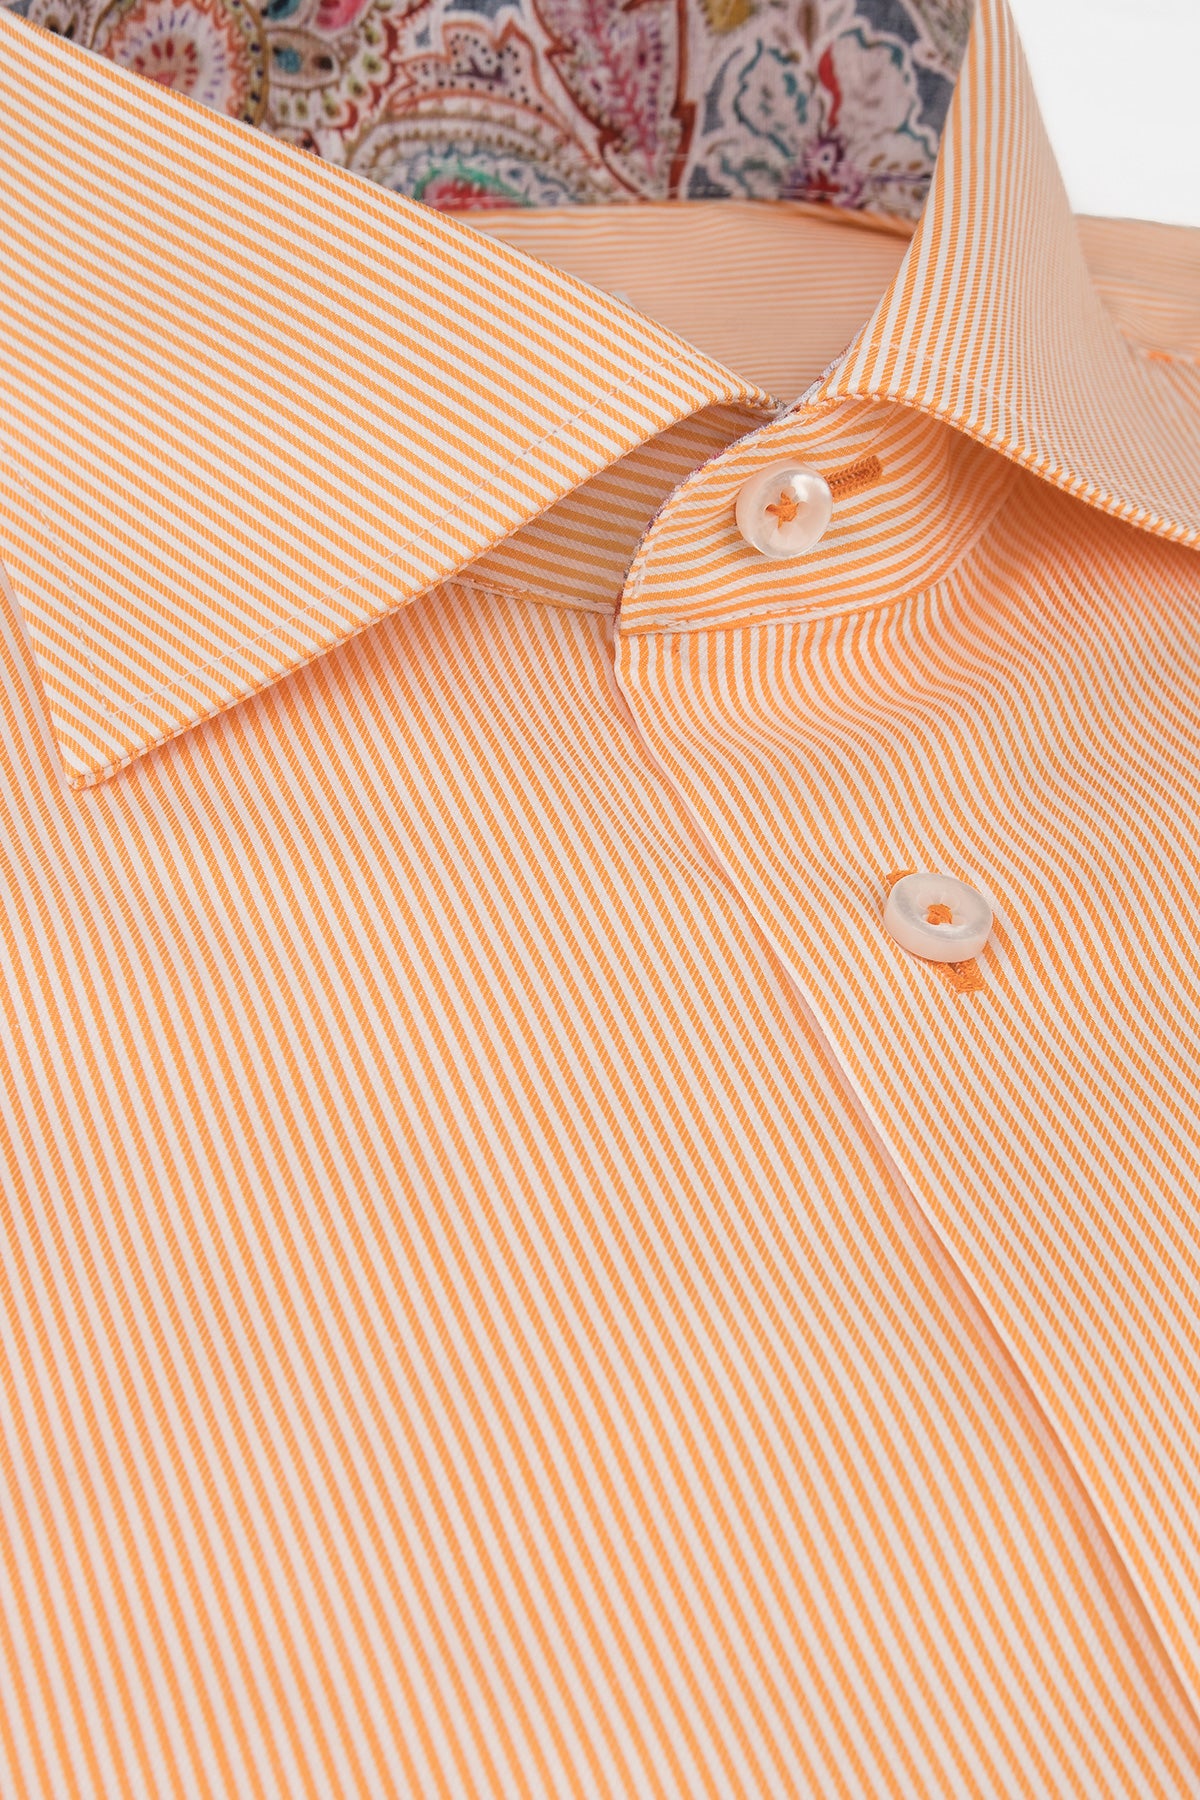 Orange striped slim fit shirt with contrast details